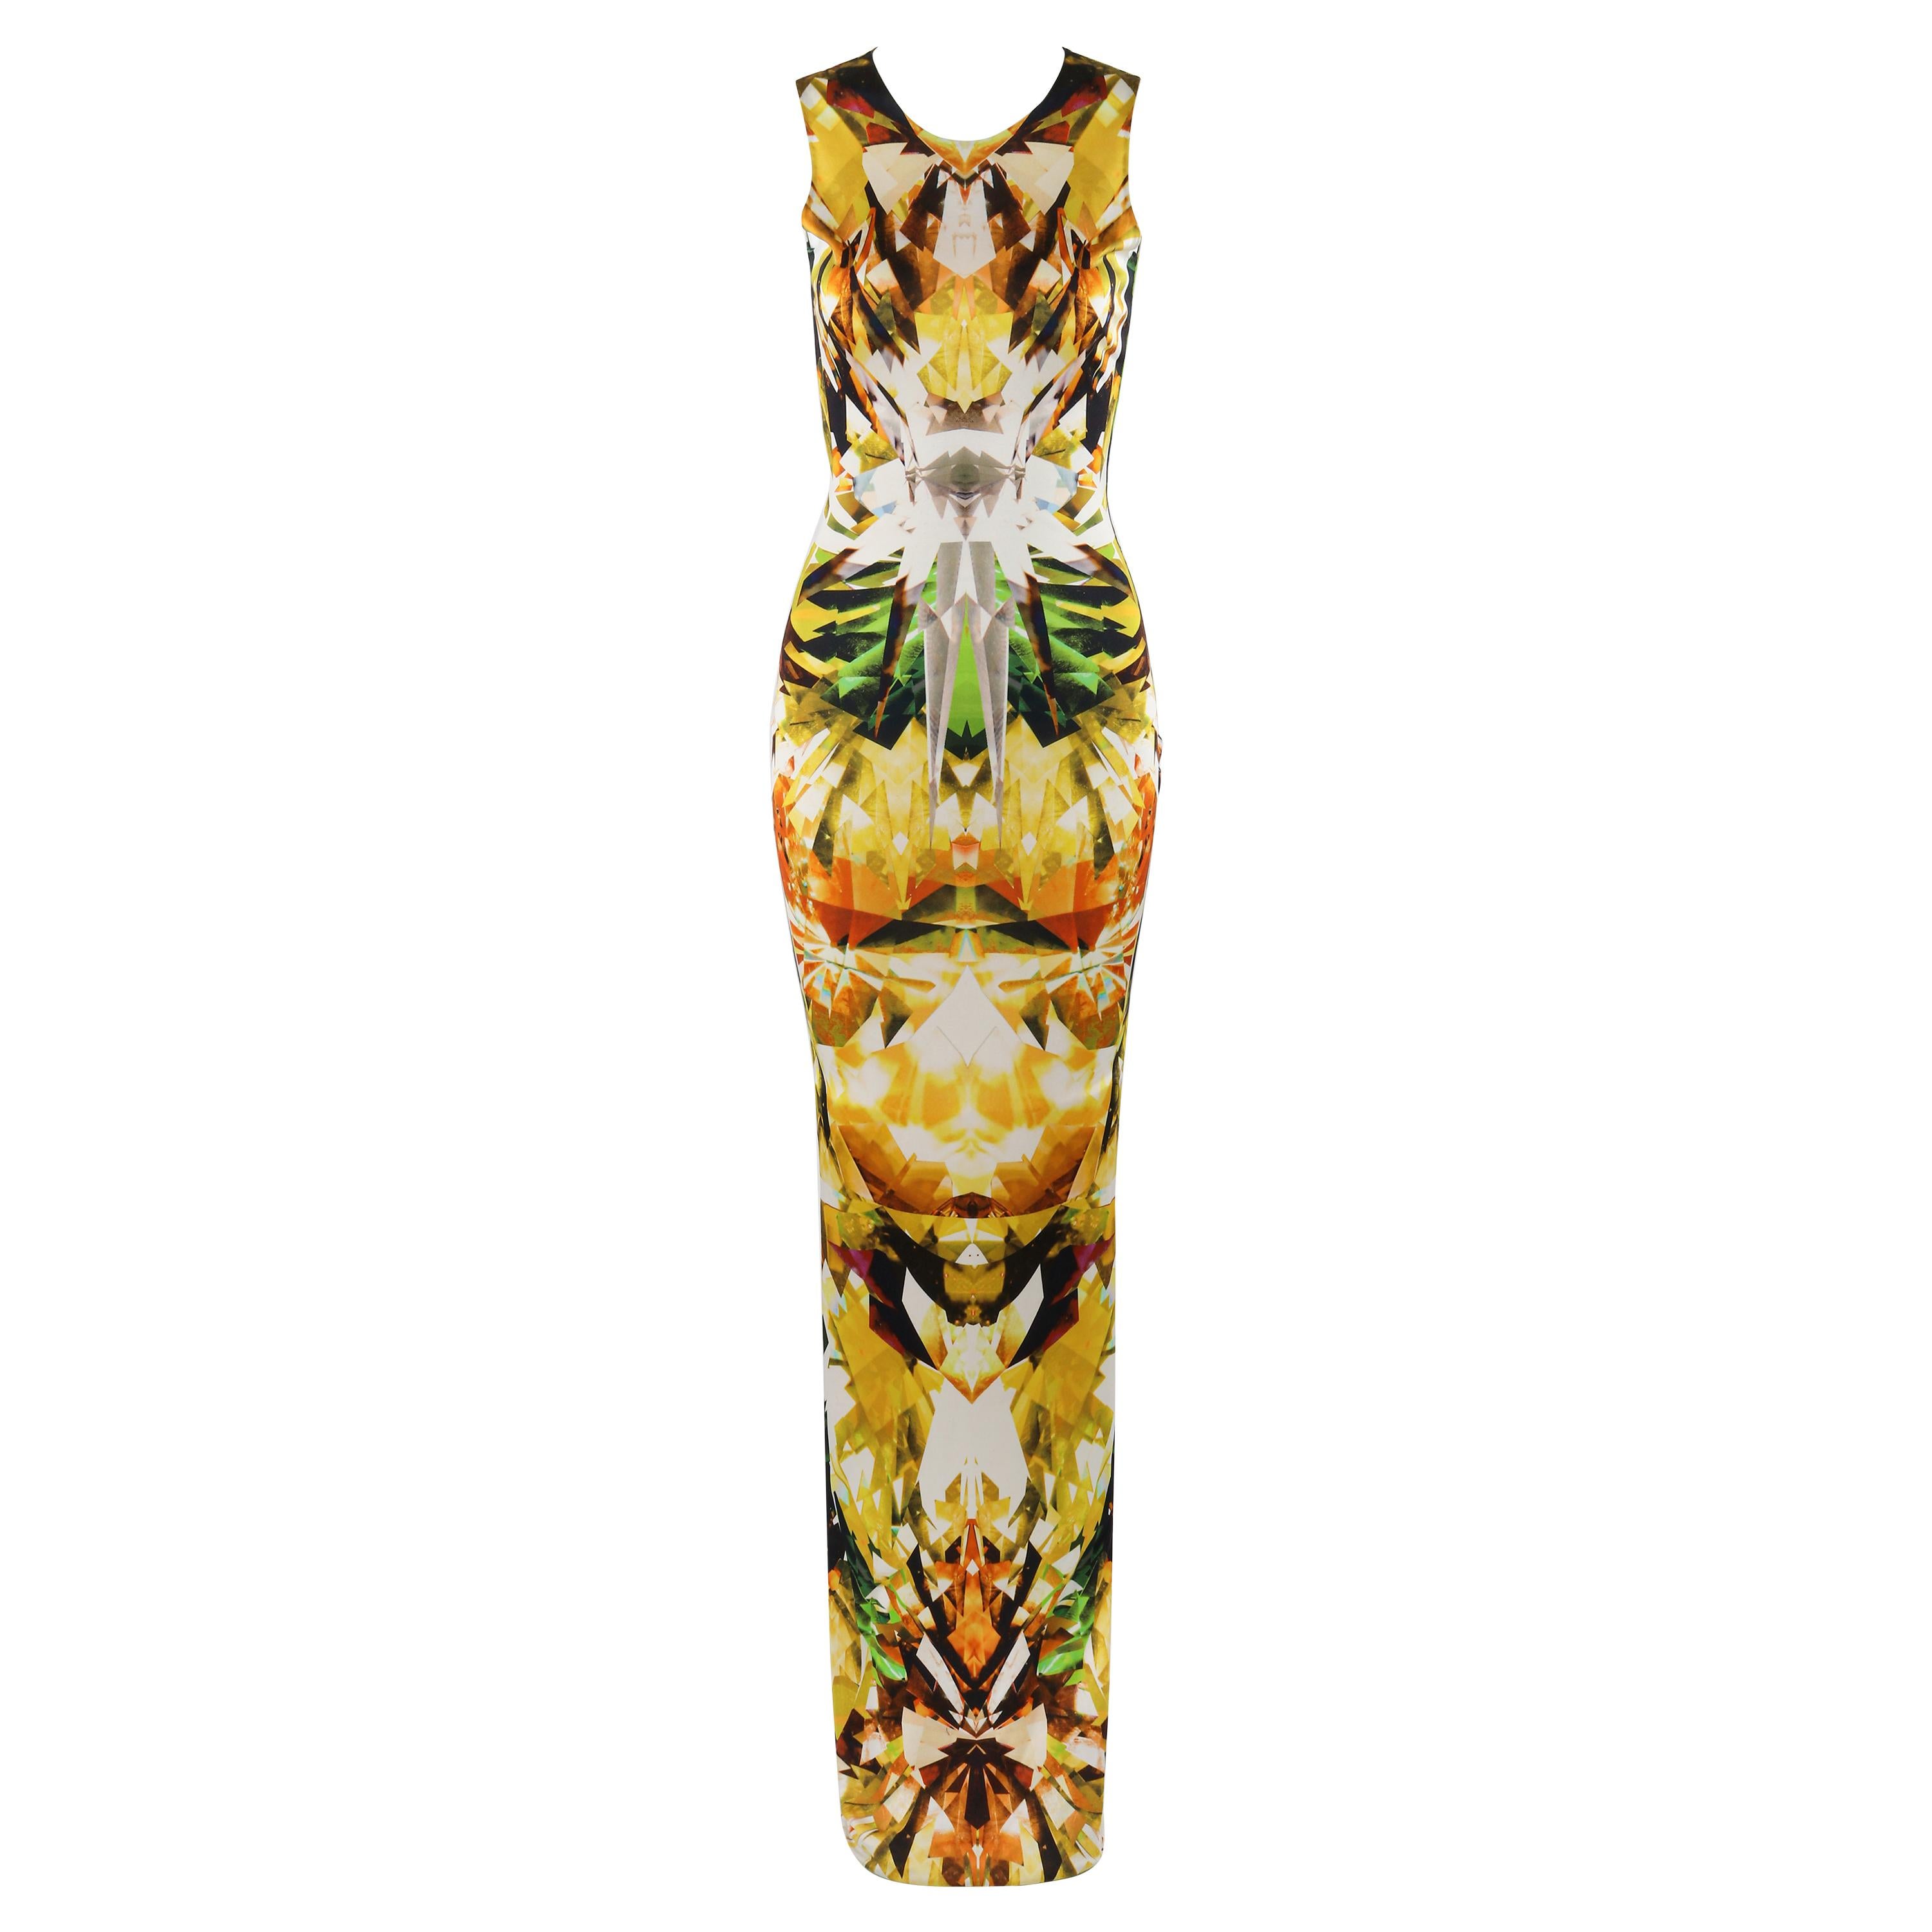 ALEXANDER McQUEEN S/S 2009 “Natural Distinction” Crystal Kaleidoscope Maxi Dress For Sale